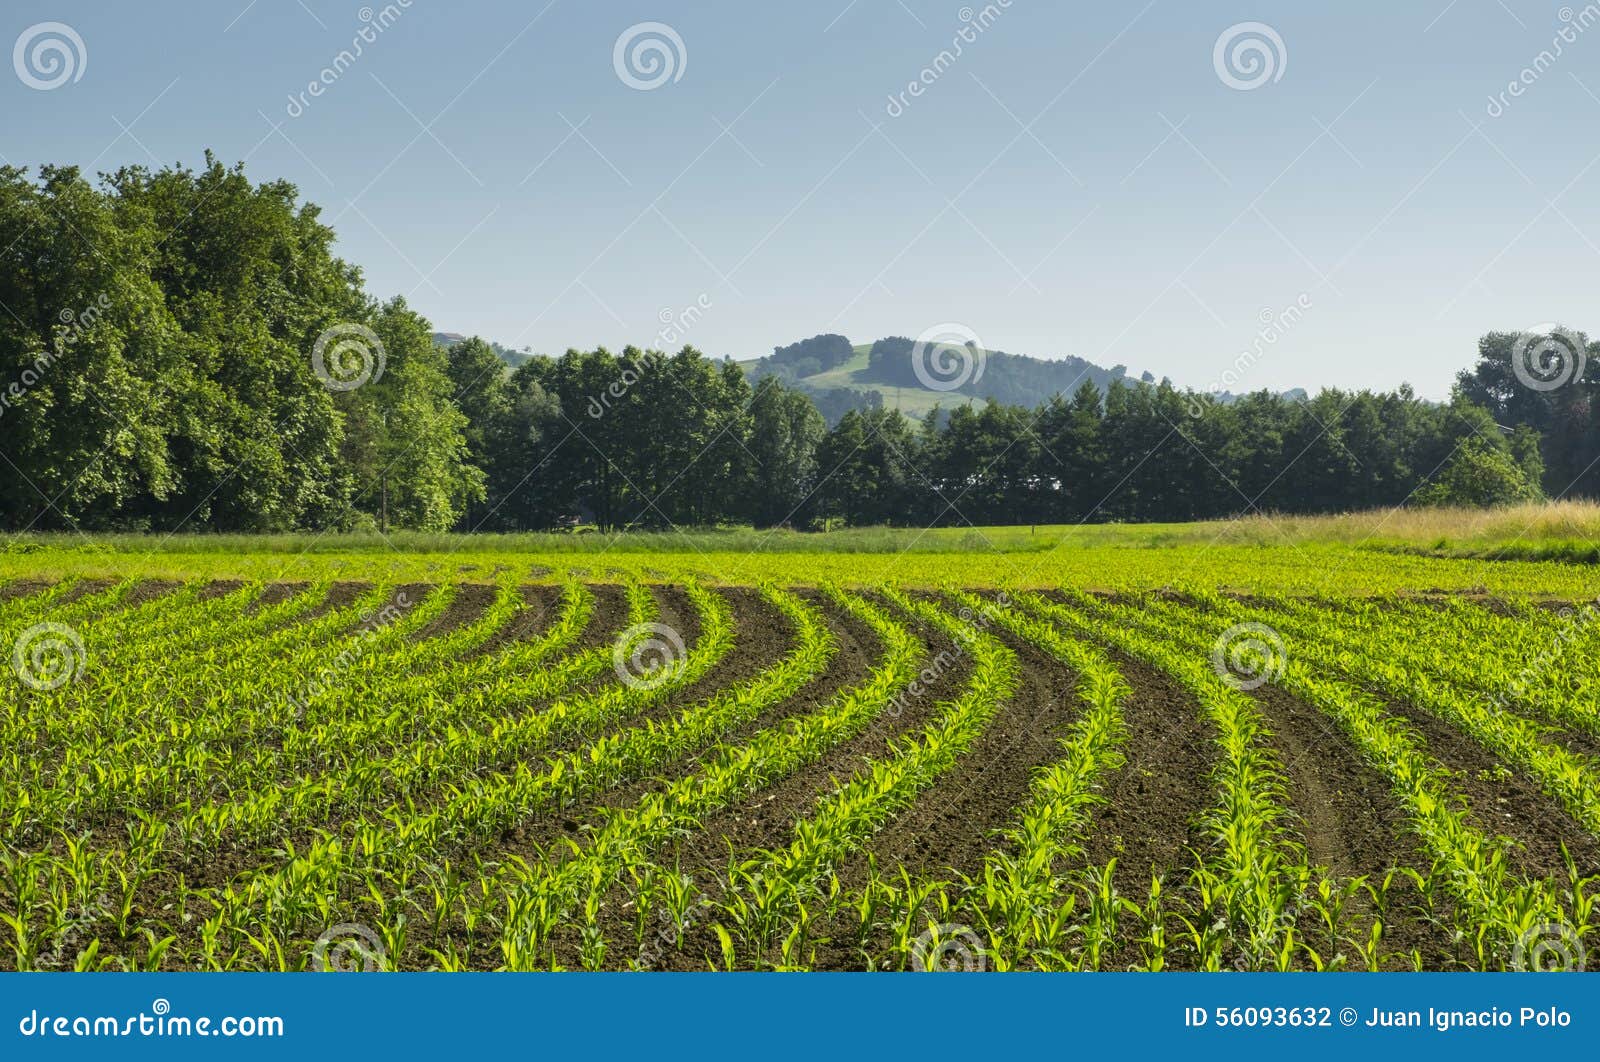 corn farm production